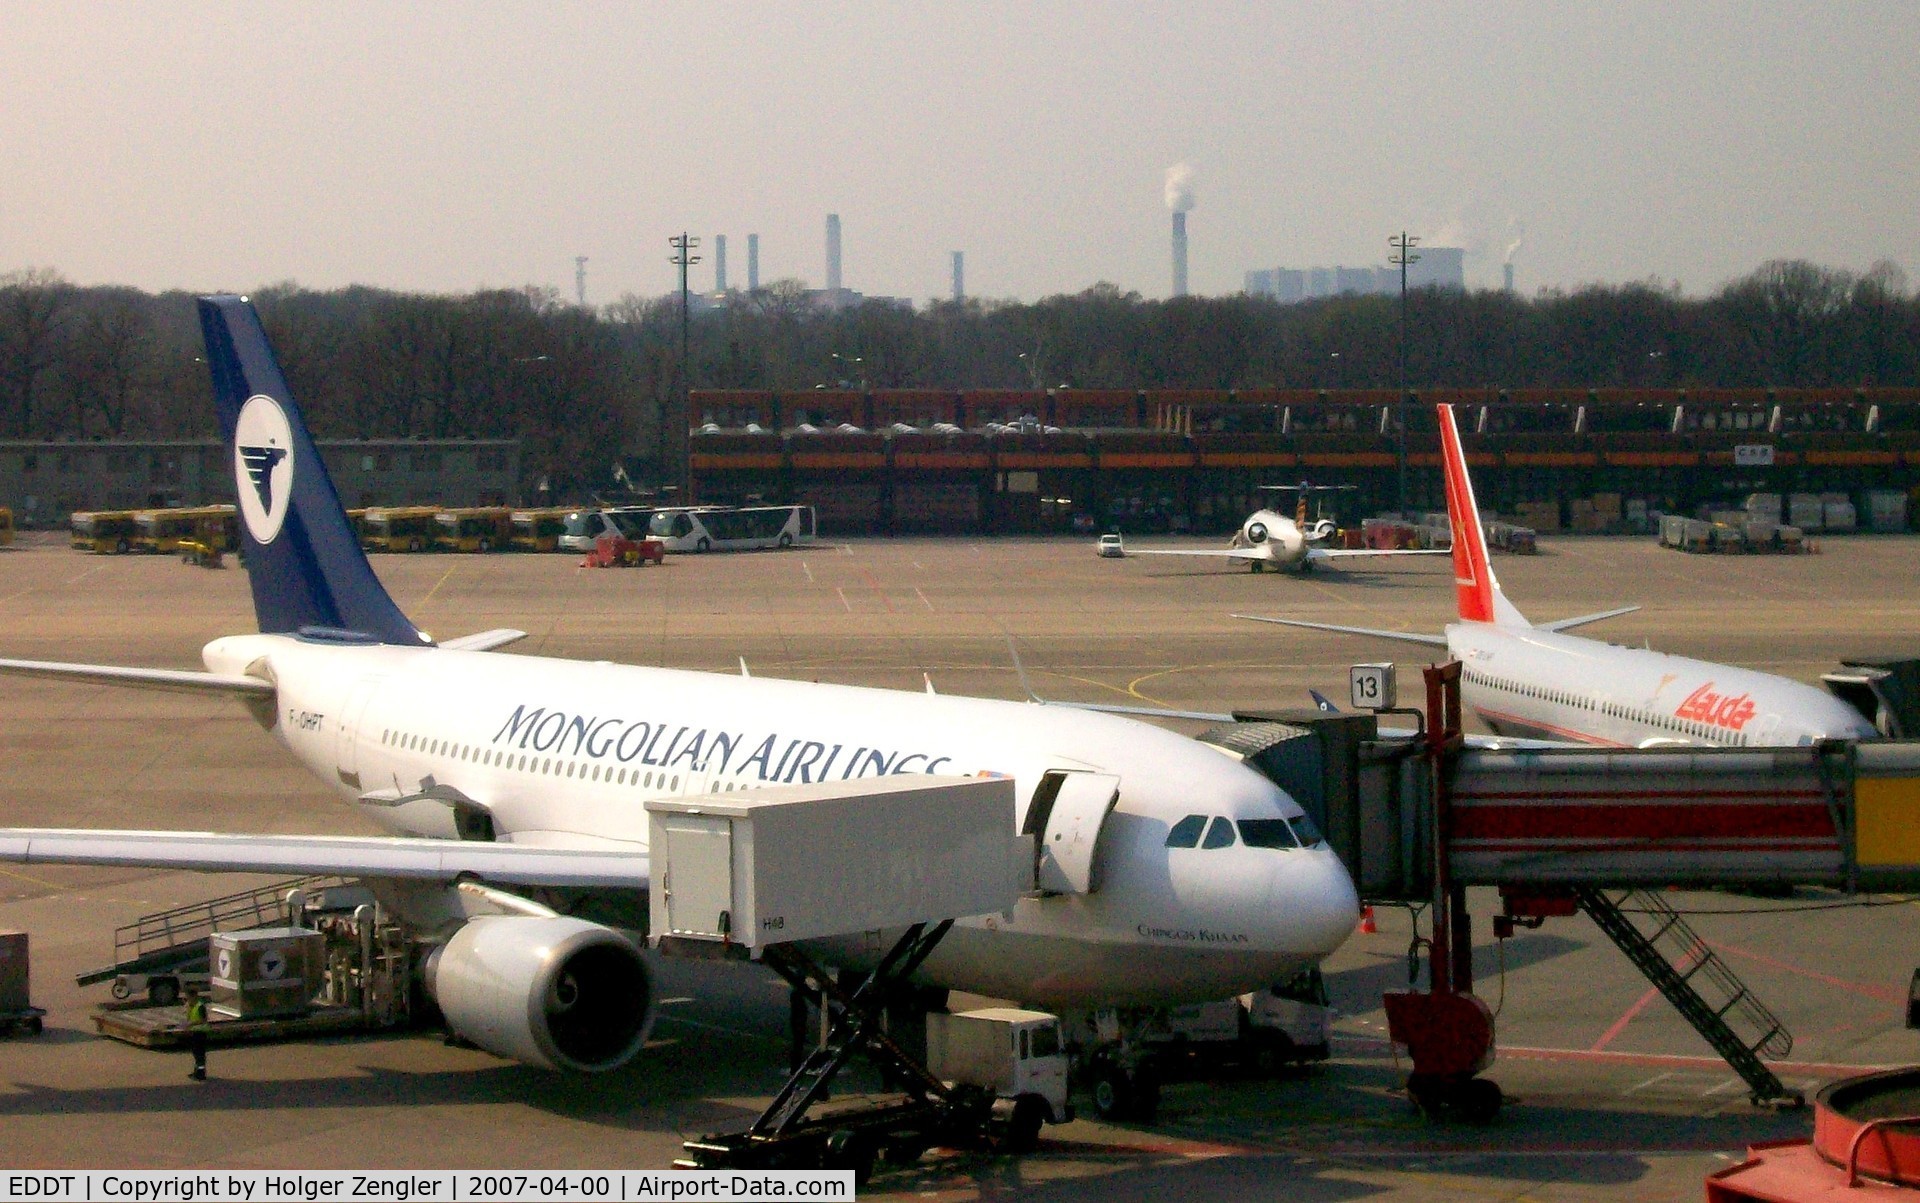 Tegel International Airport (closing in 2011), Berlin Germany (EDDT) - Austro-Mongolian meeting in Berlin